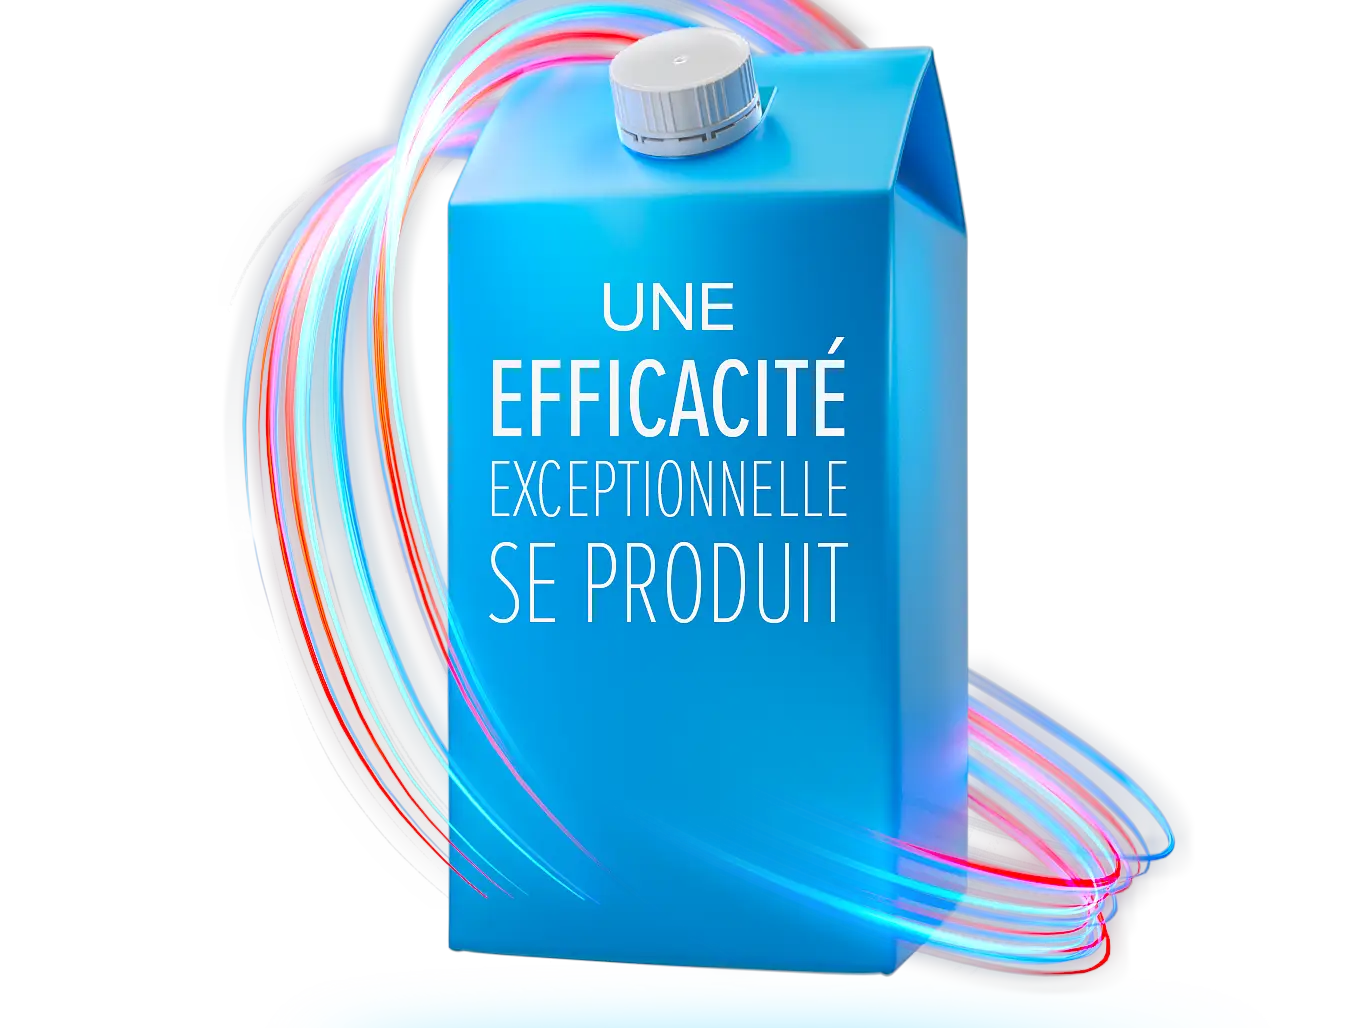 Tesa-Flexoprint-Efficiency-French